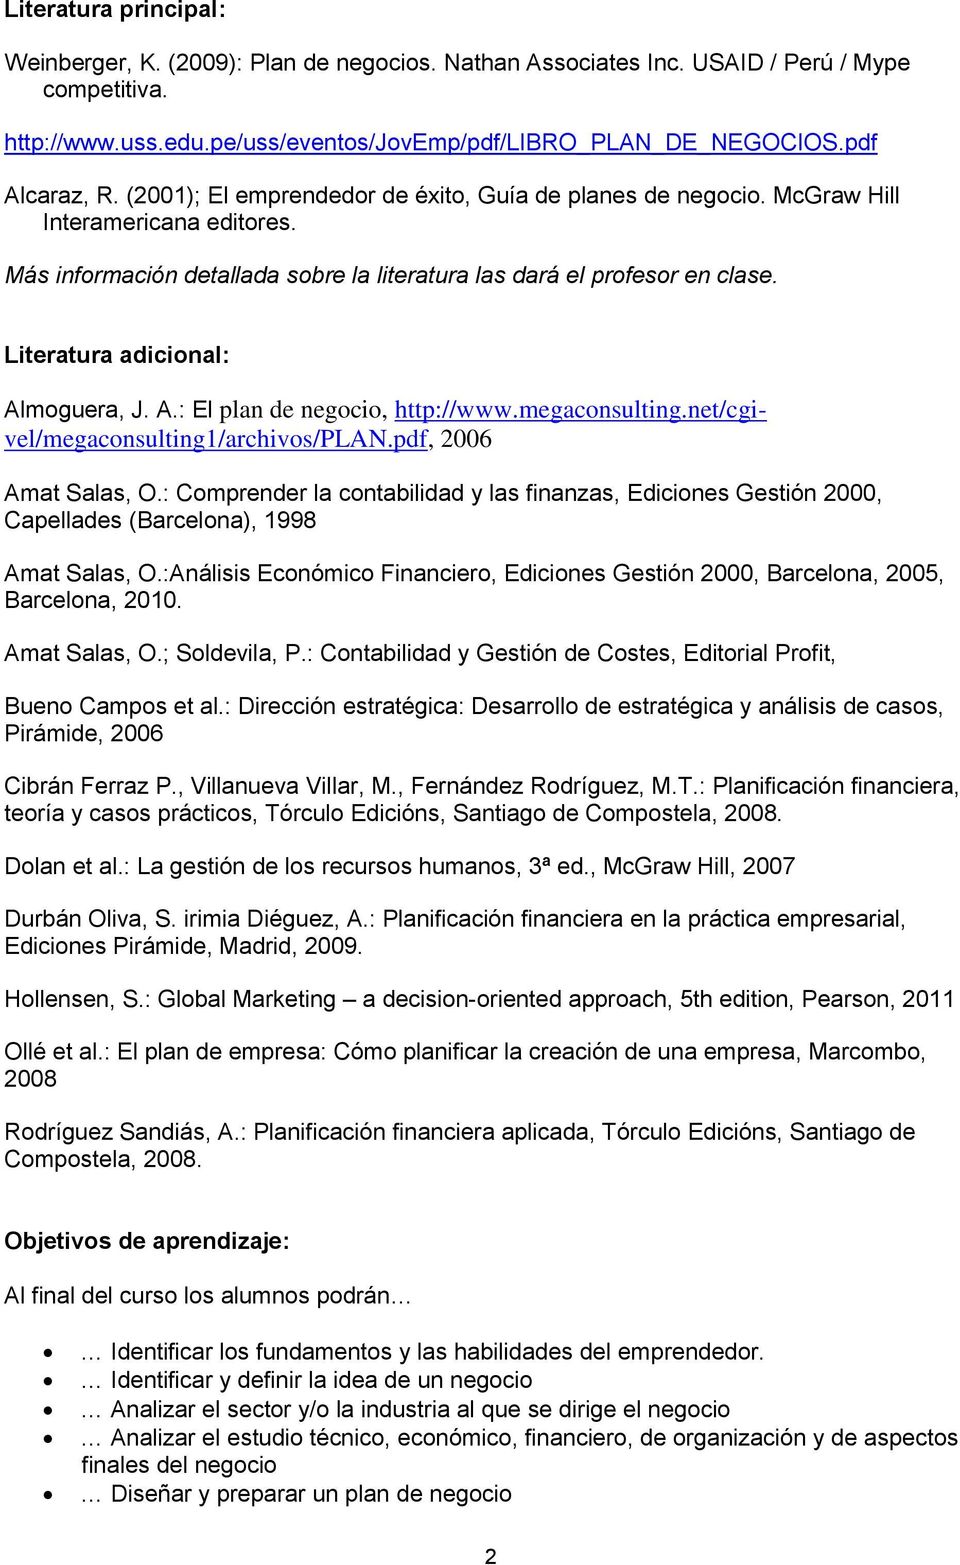 Literatura adicional: Almoguera, J. A.: El plan de negocio, http://www.megaconsulting.net/cgivel/megaconsulting1/archivos/plan.pdf, 2006 Amat Salas, O.